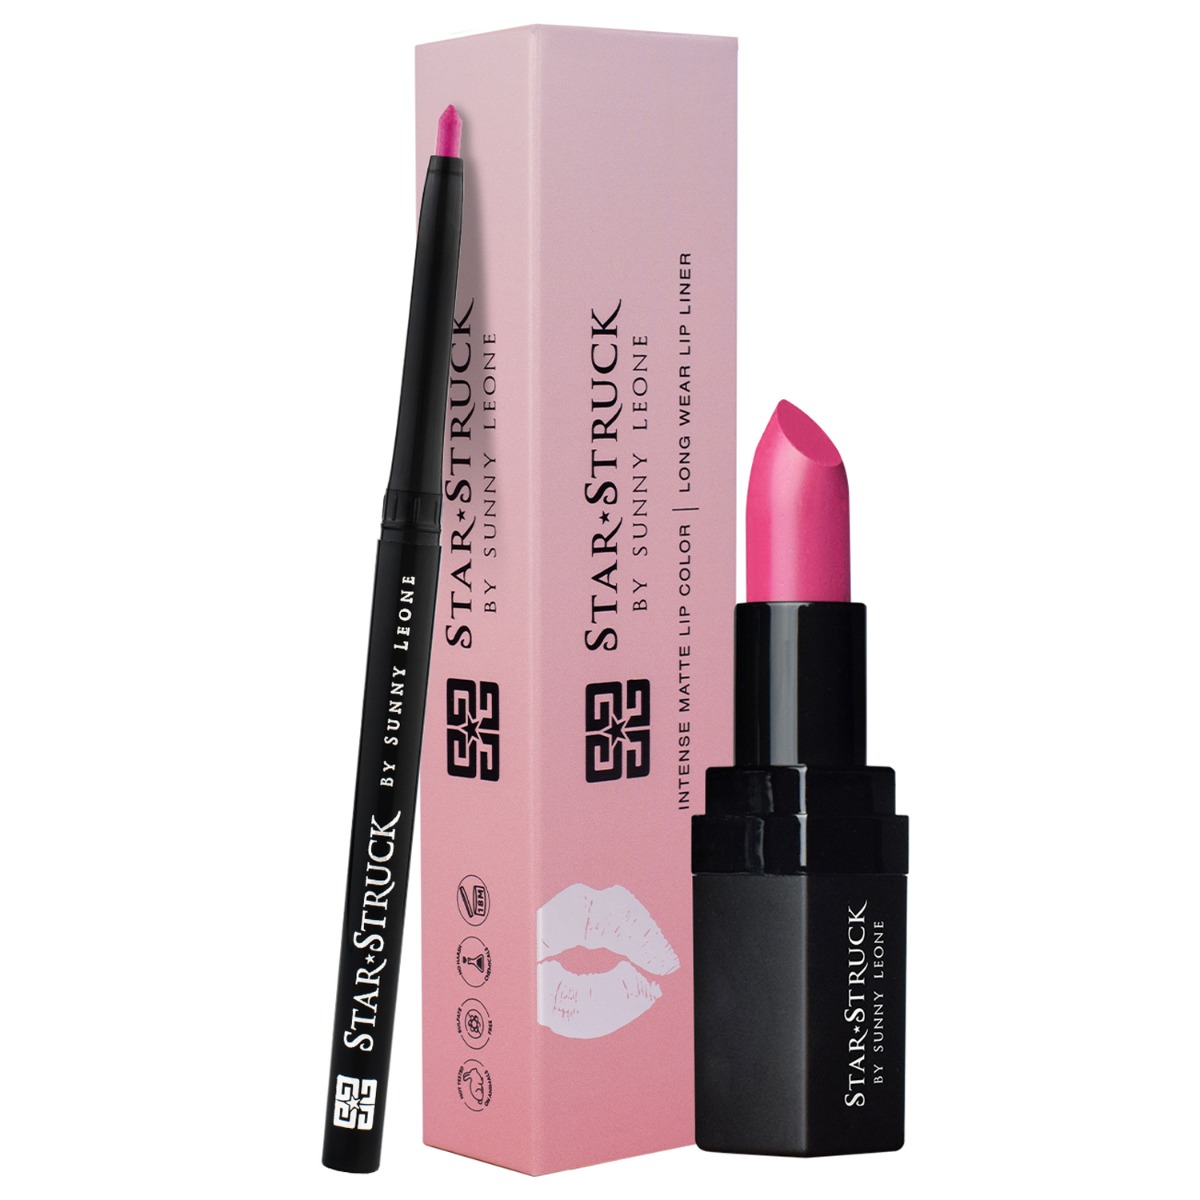 Star Struck by Sunny Leone Kiss Me Pink Lip Kit - Lipstick, 4.45 gm + Lip Liner, 0.25gm Combo